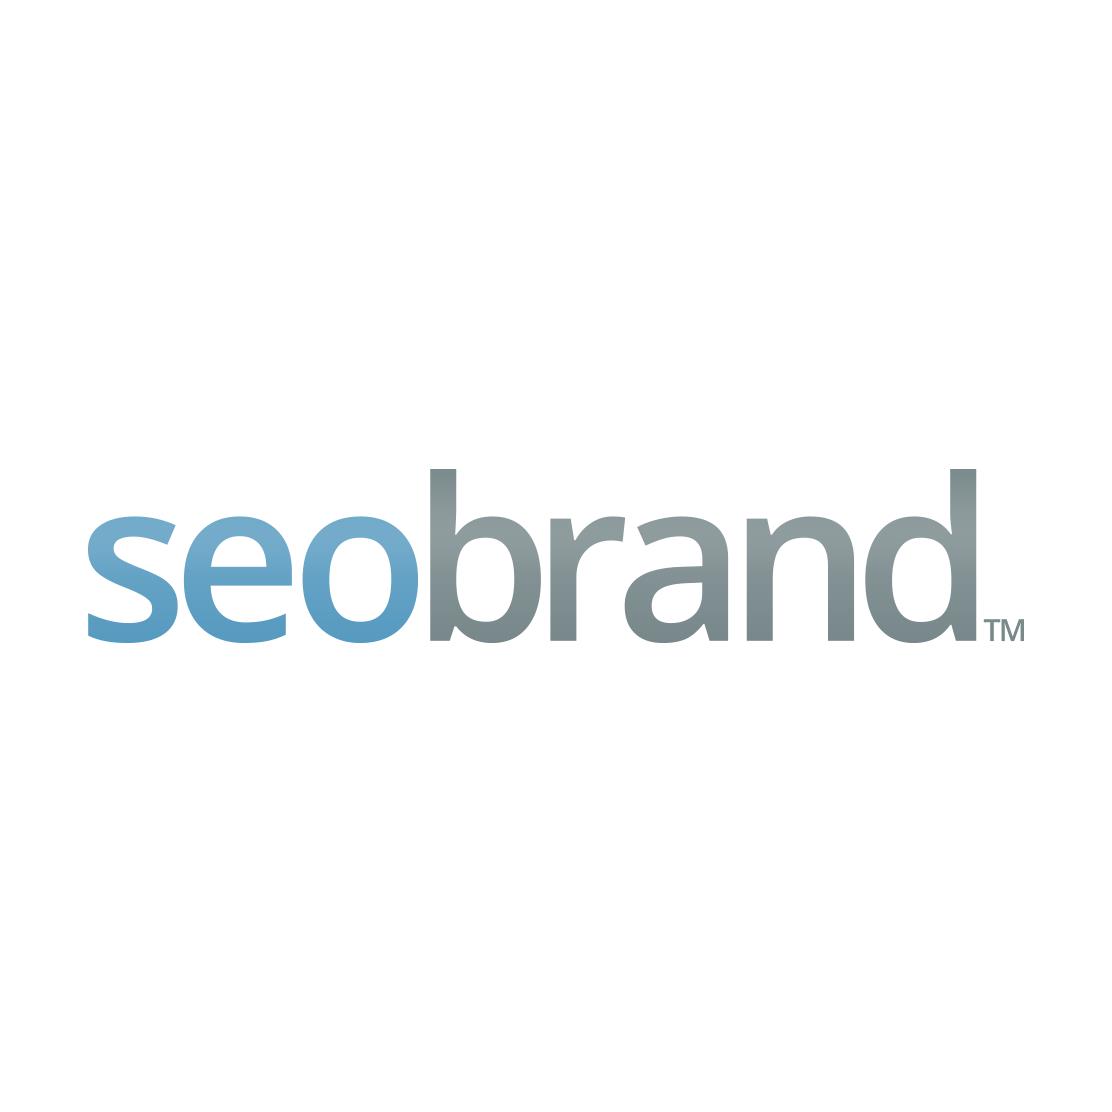 Best ORM Business Logo: SEO Brand